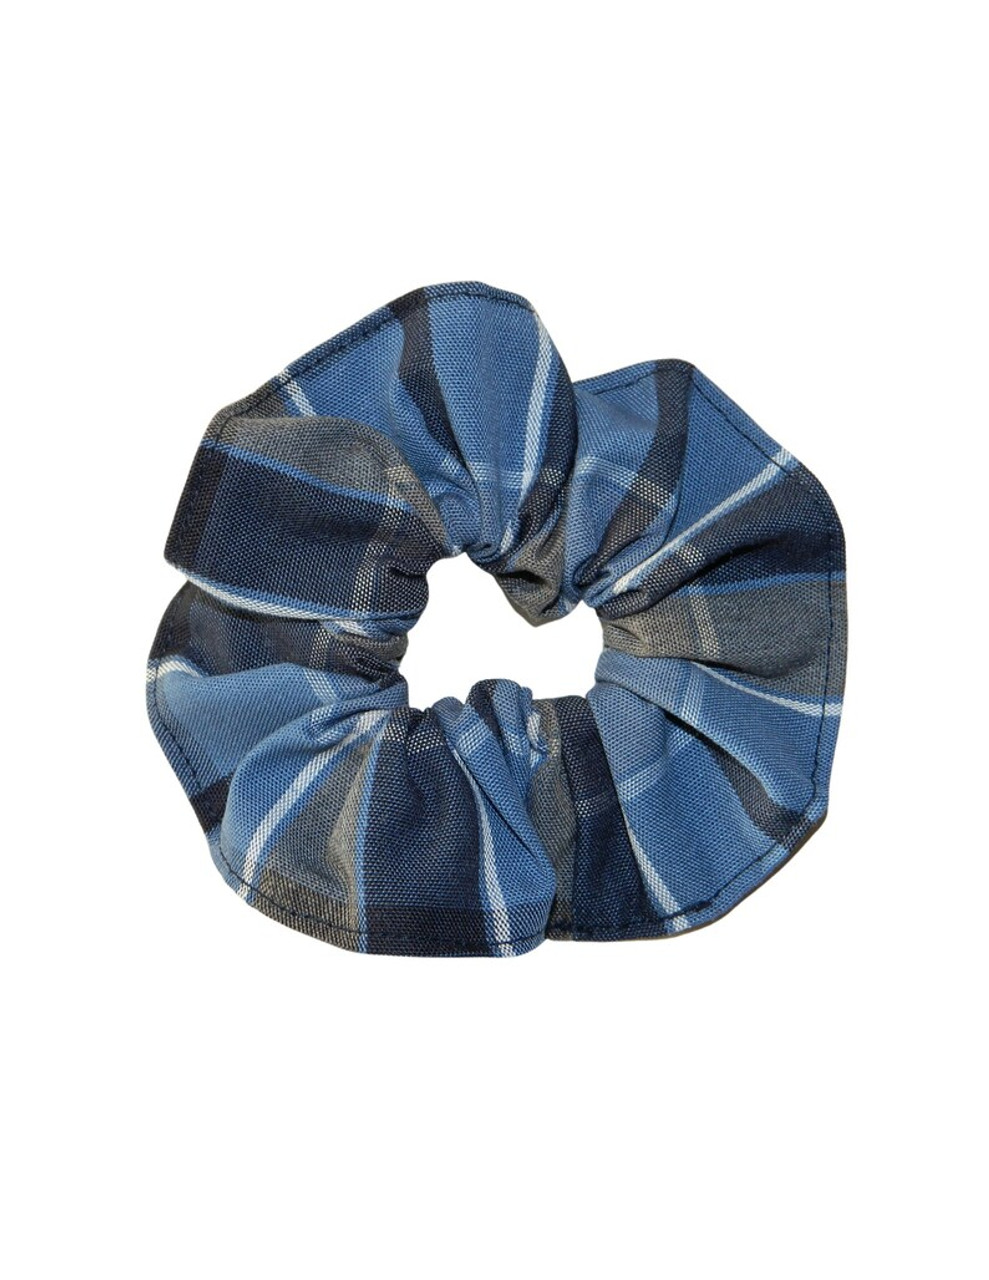 Blue, Gray & Navy Plaid Scrunchie